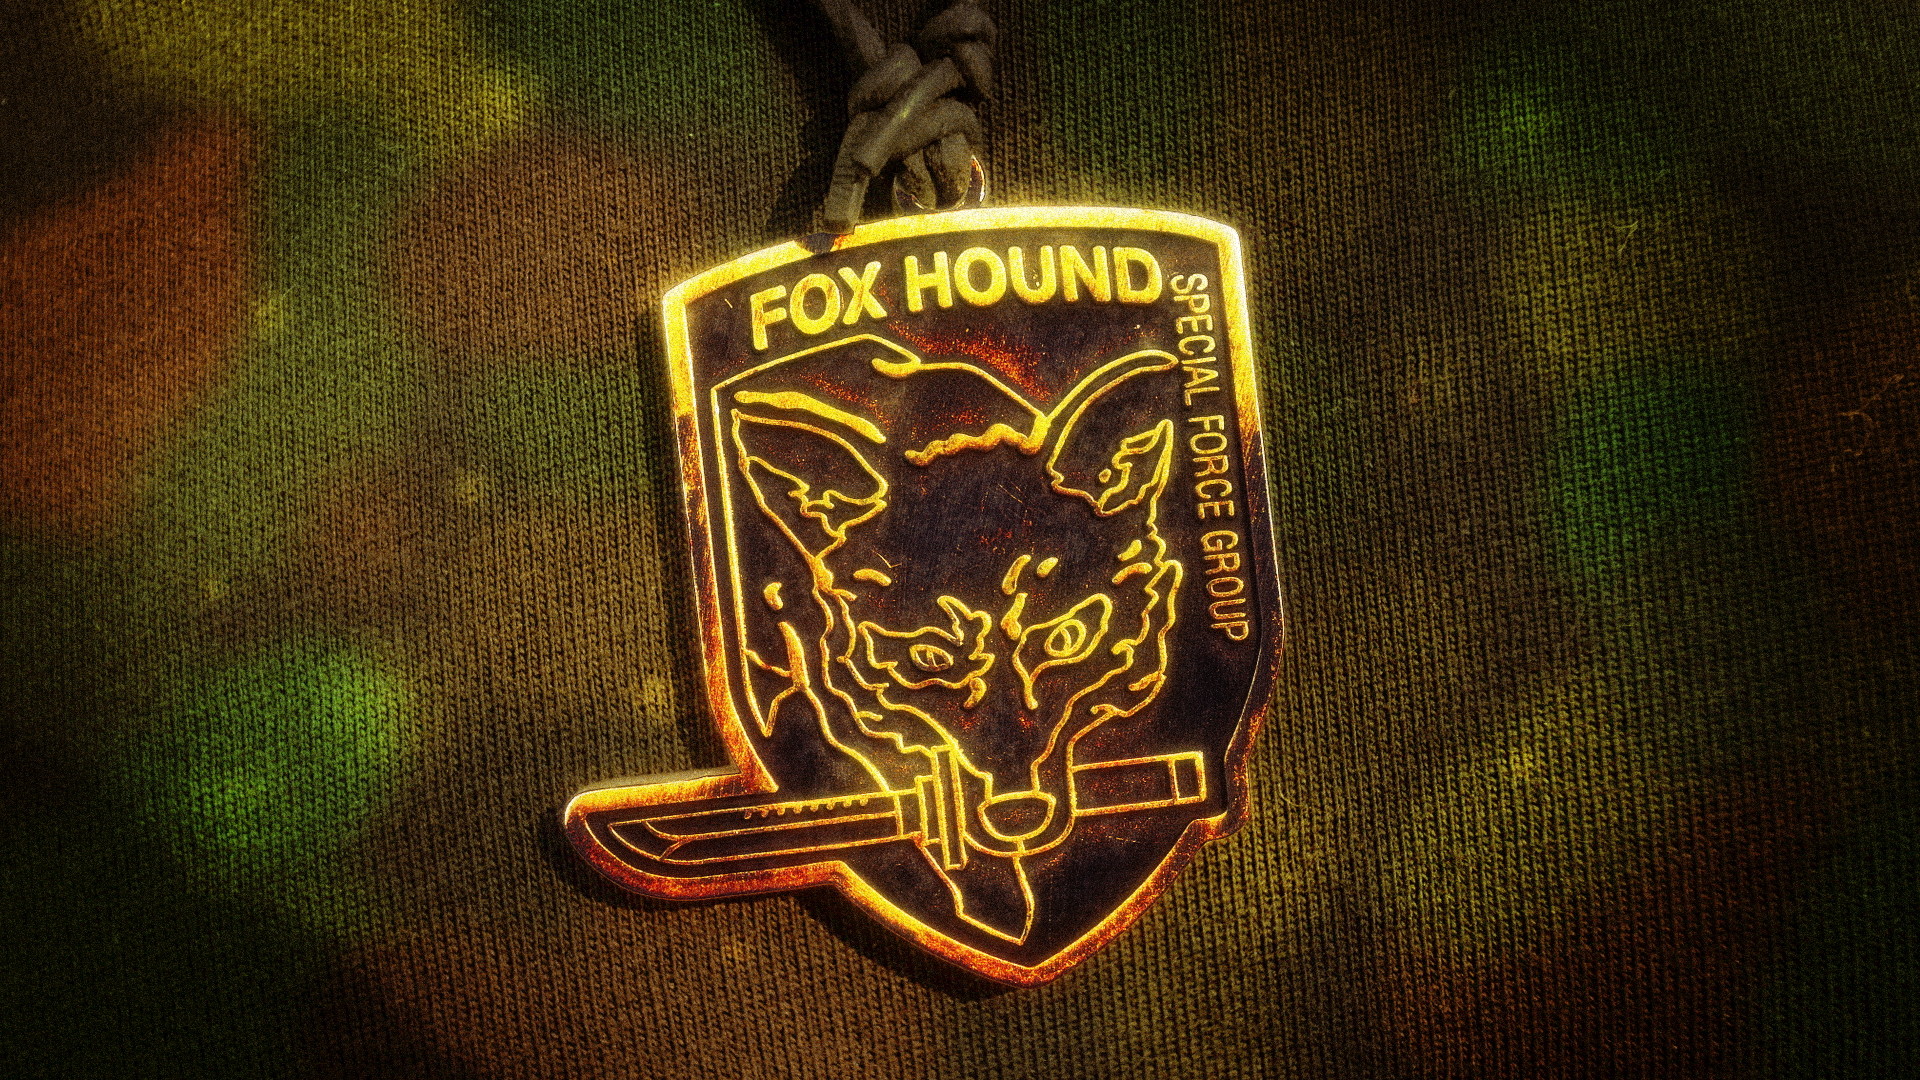 1920x1080 ... Fox Hound Pendant Camo Wallpaper by nxsvinyard